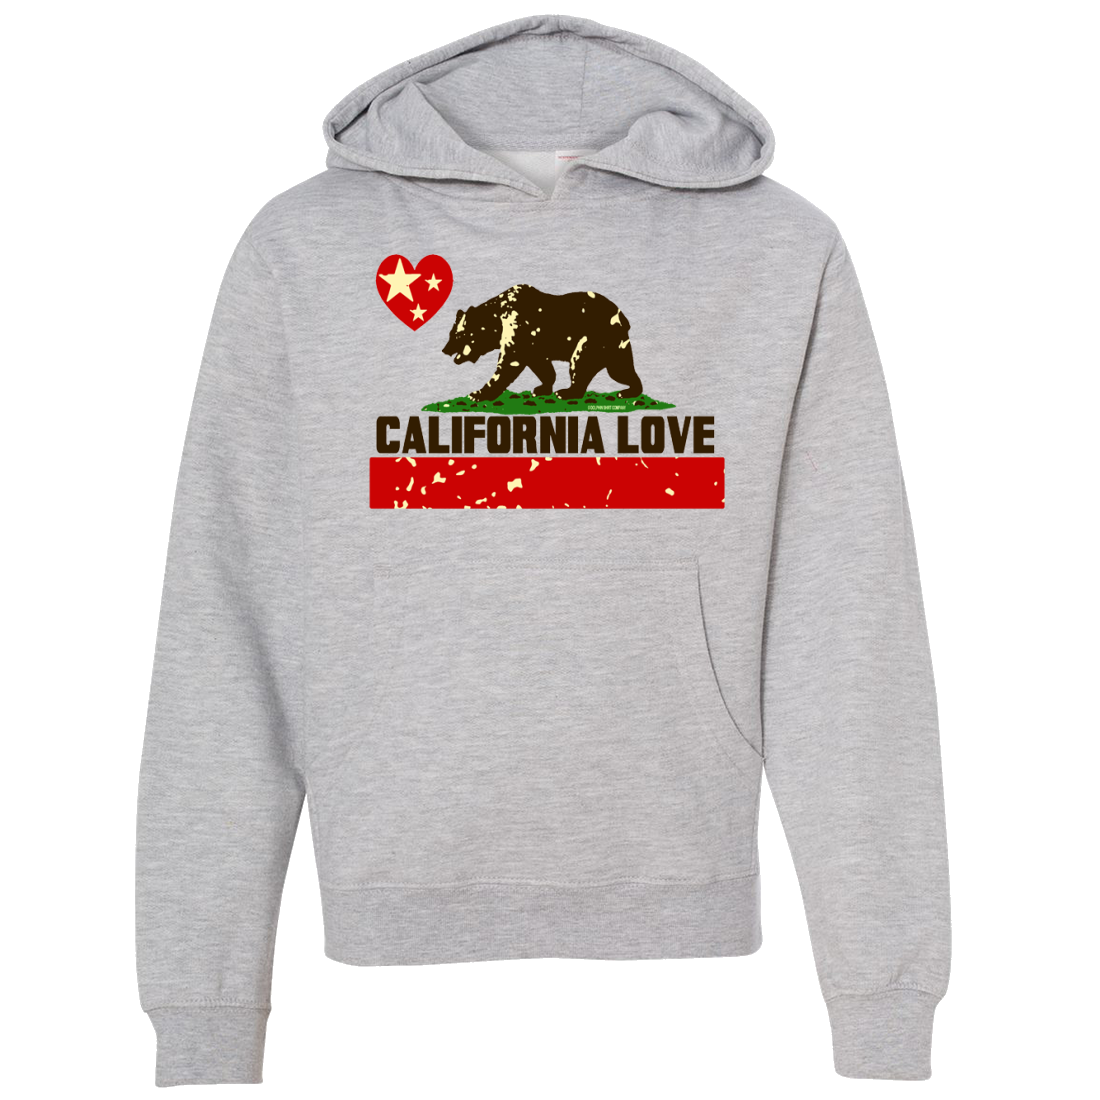 California Republic Youth Hoodies - California Republic Clothes